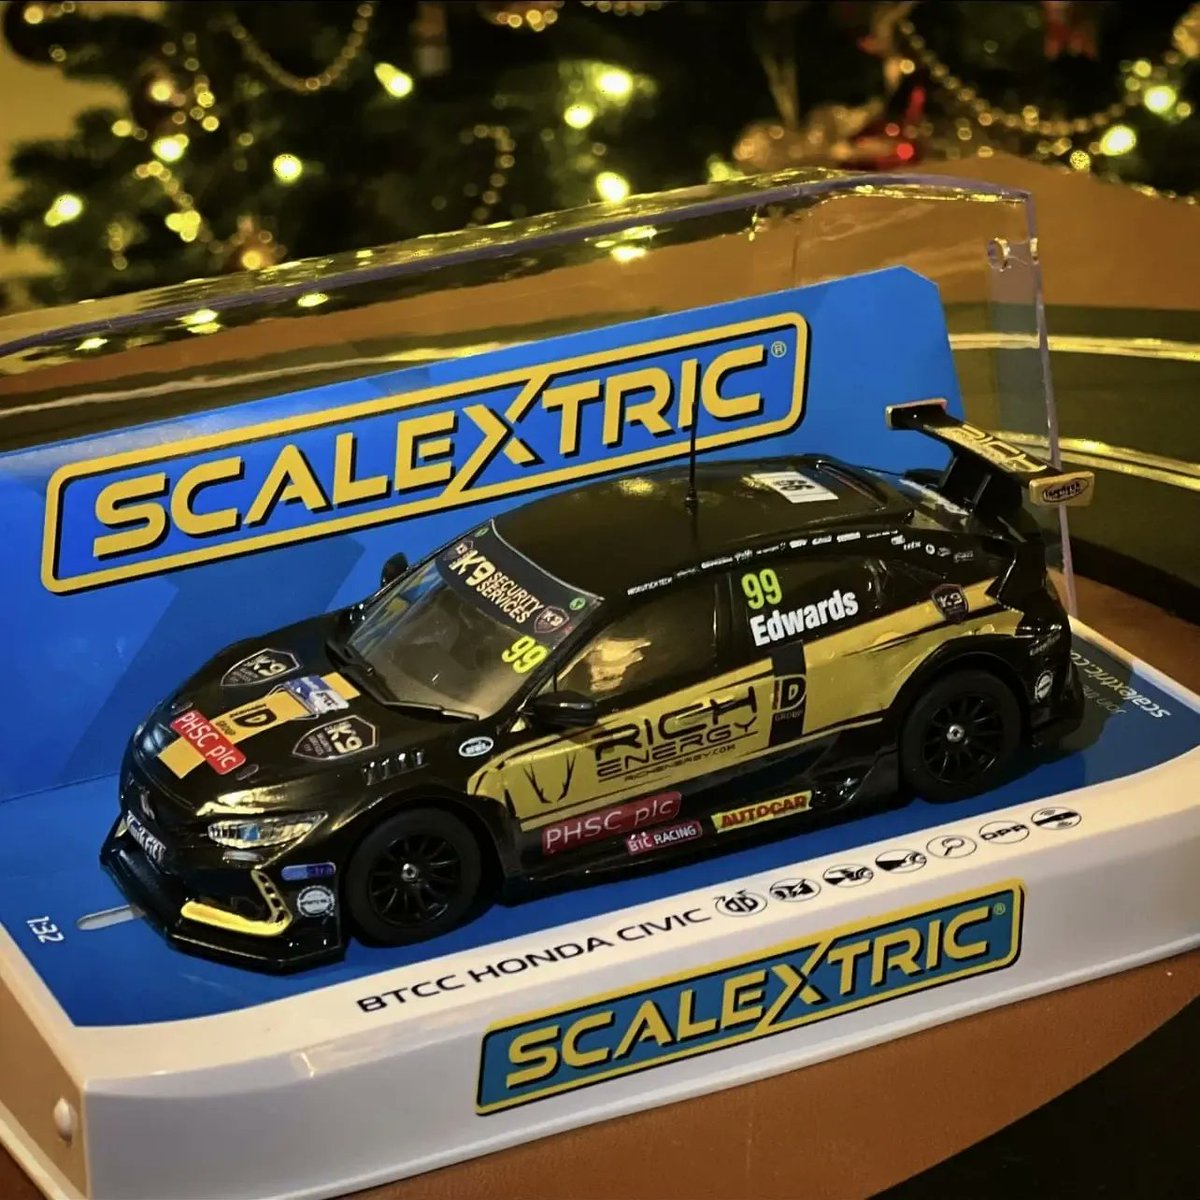 Premium performance with @Scalextric #RichEnergy #Motorsport #Scalextric